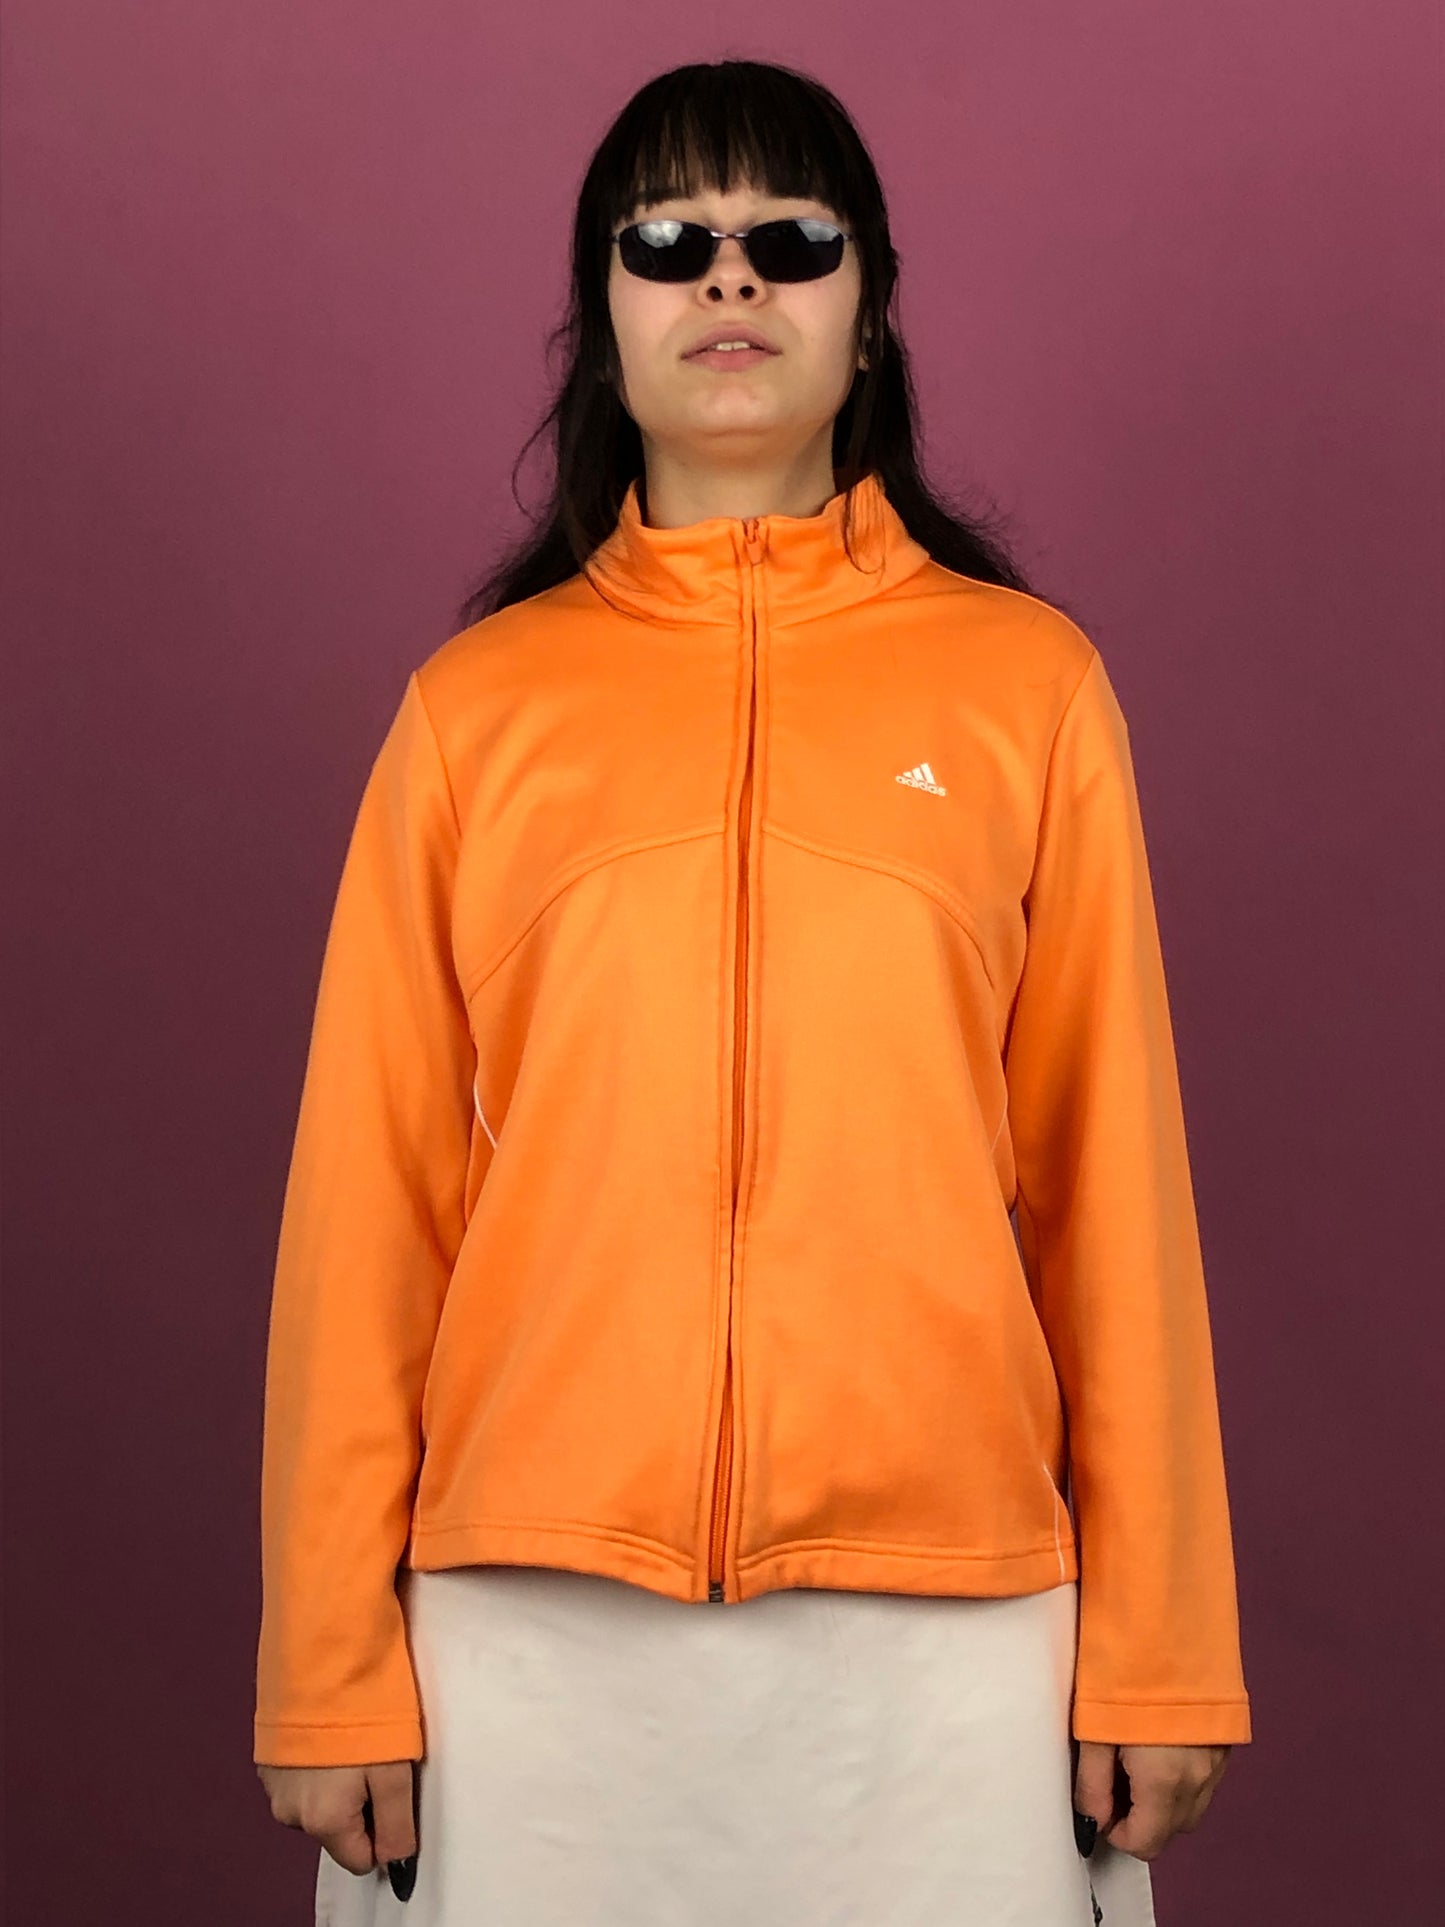 Adidas Vintage Women's Track Jacket - M Orange Polyester Blend